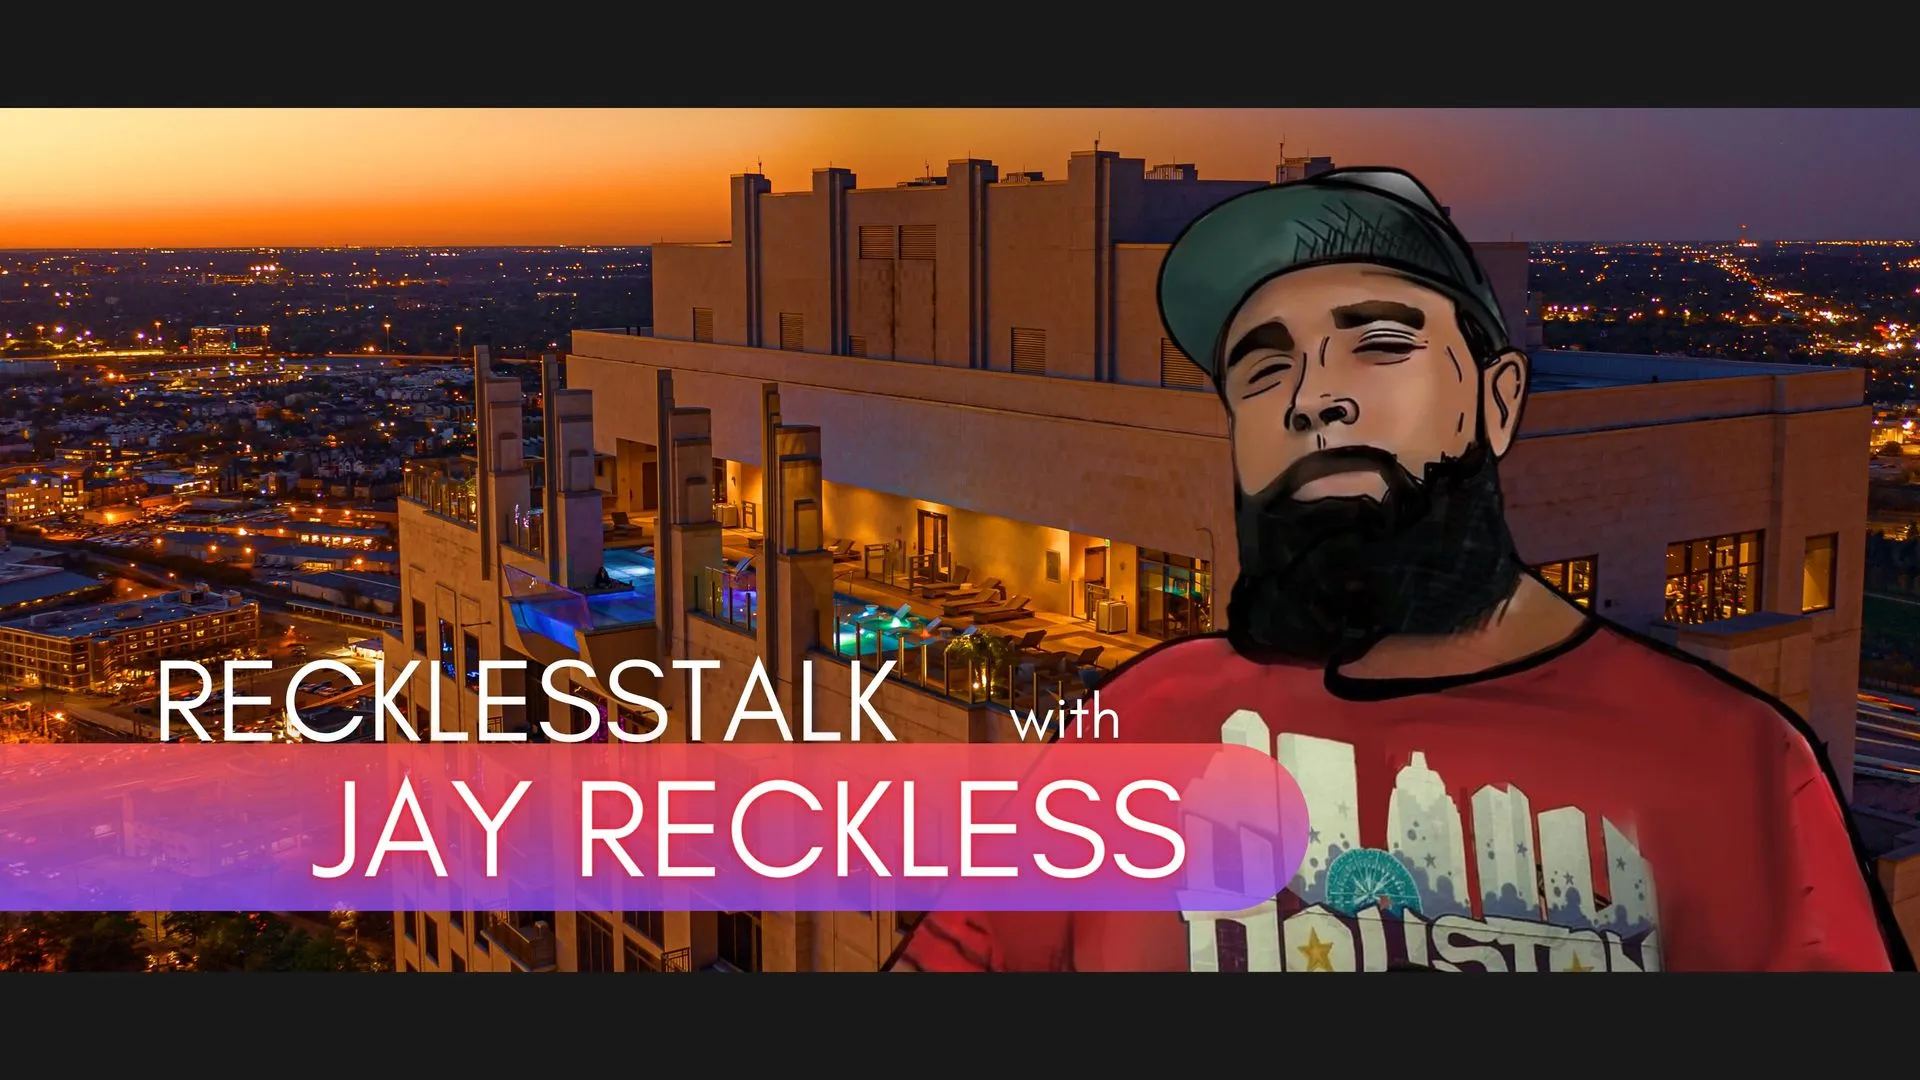 RecklessTalk Features the Houston Energy